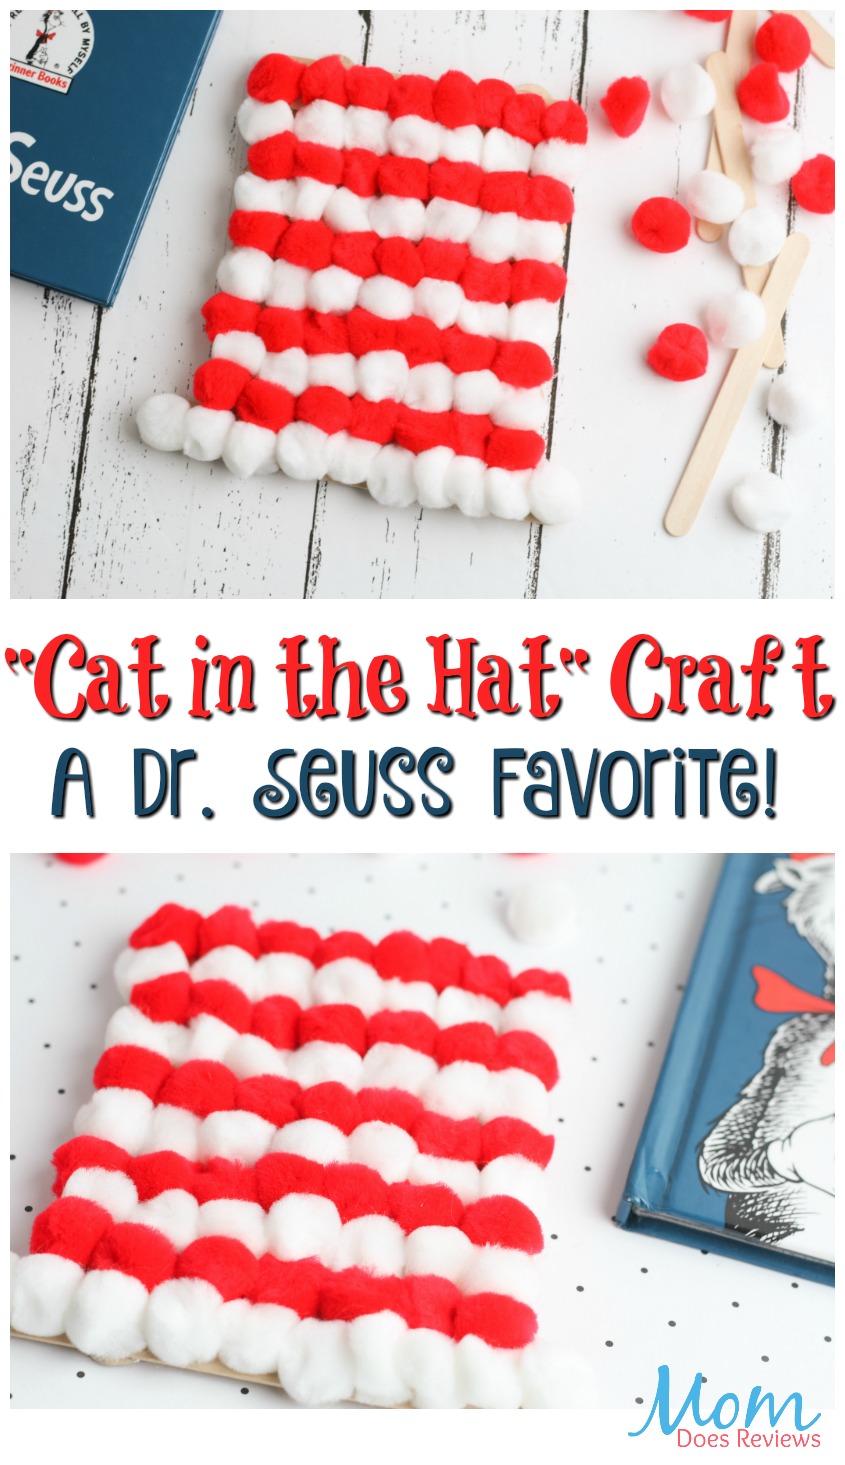 Cat in the Hat Craft #drseuss #craft #funstuff #kids